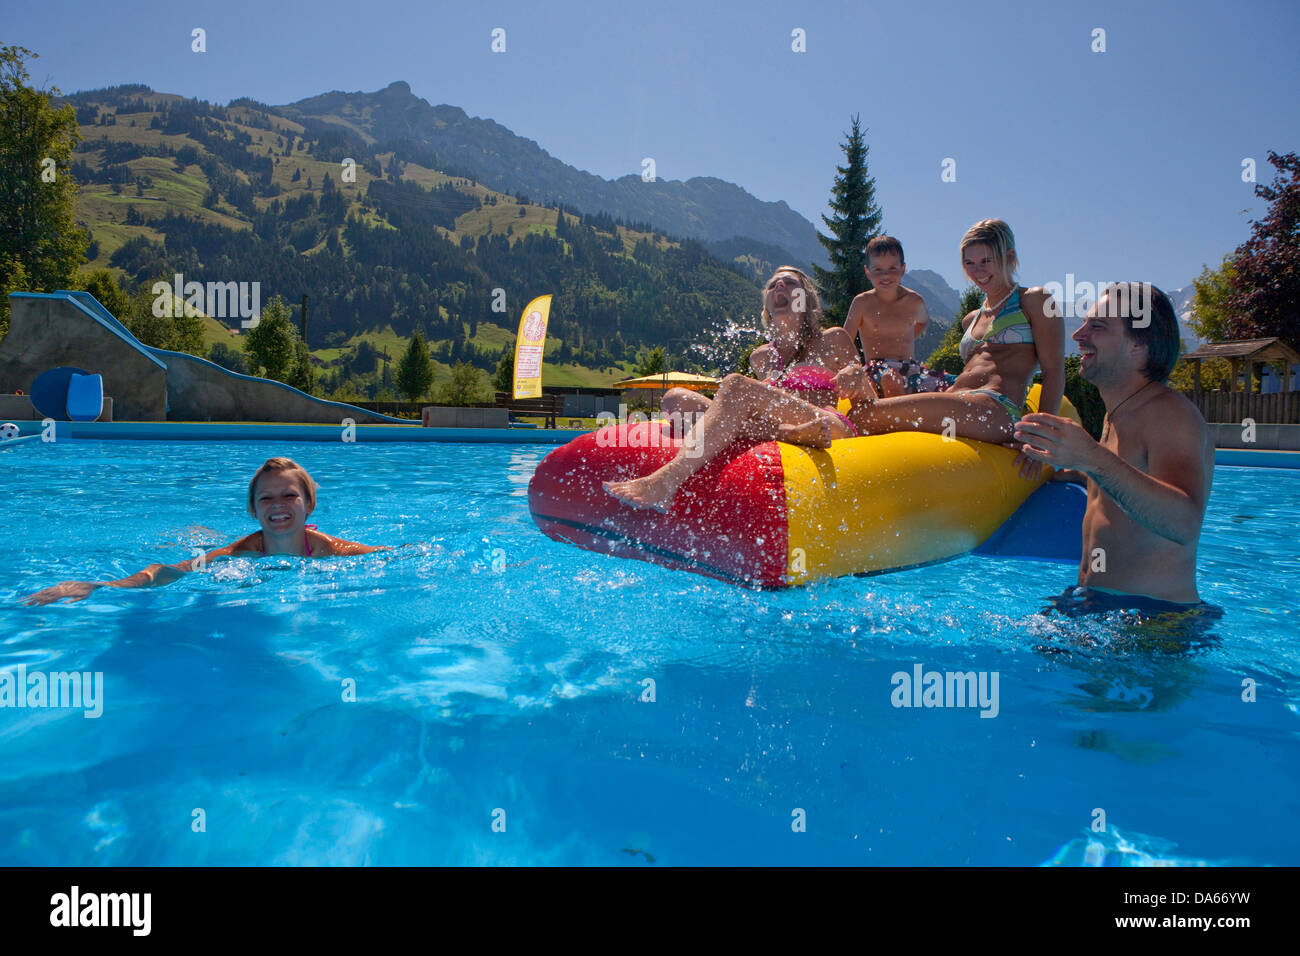 https://c8.alamy.com/comp/DA66YW/family-swimming-pool-canton-bern-bernese-oberland-bath-bathing-swimming-DA66YW.jpg